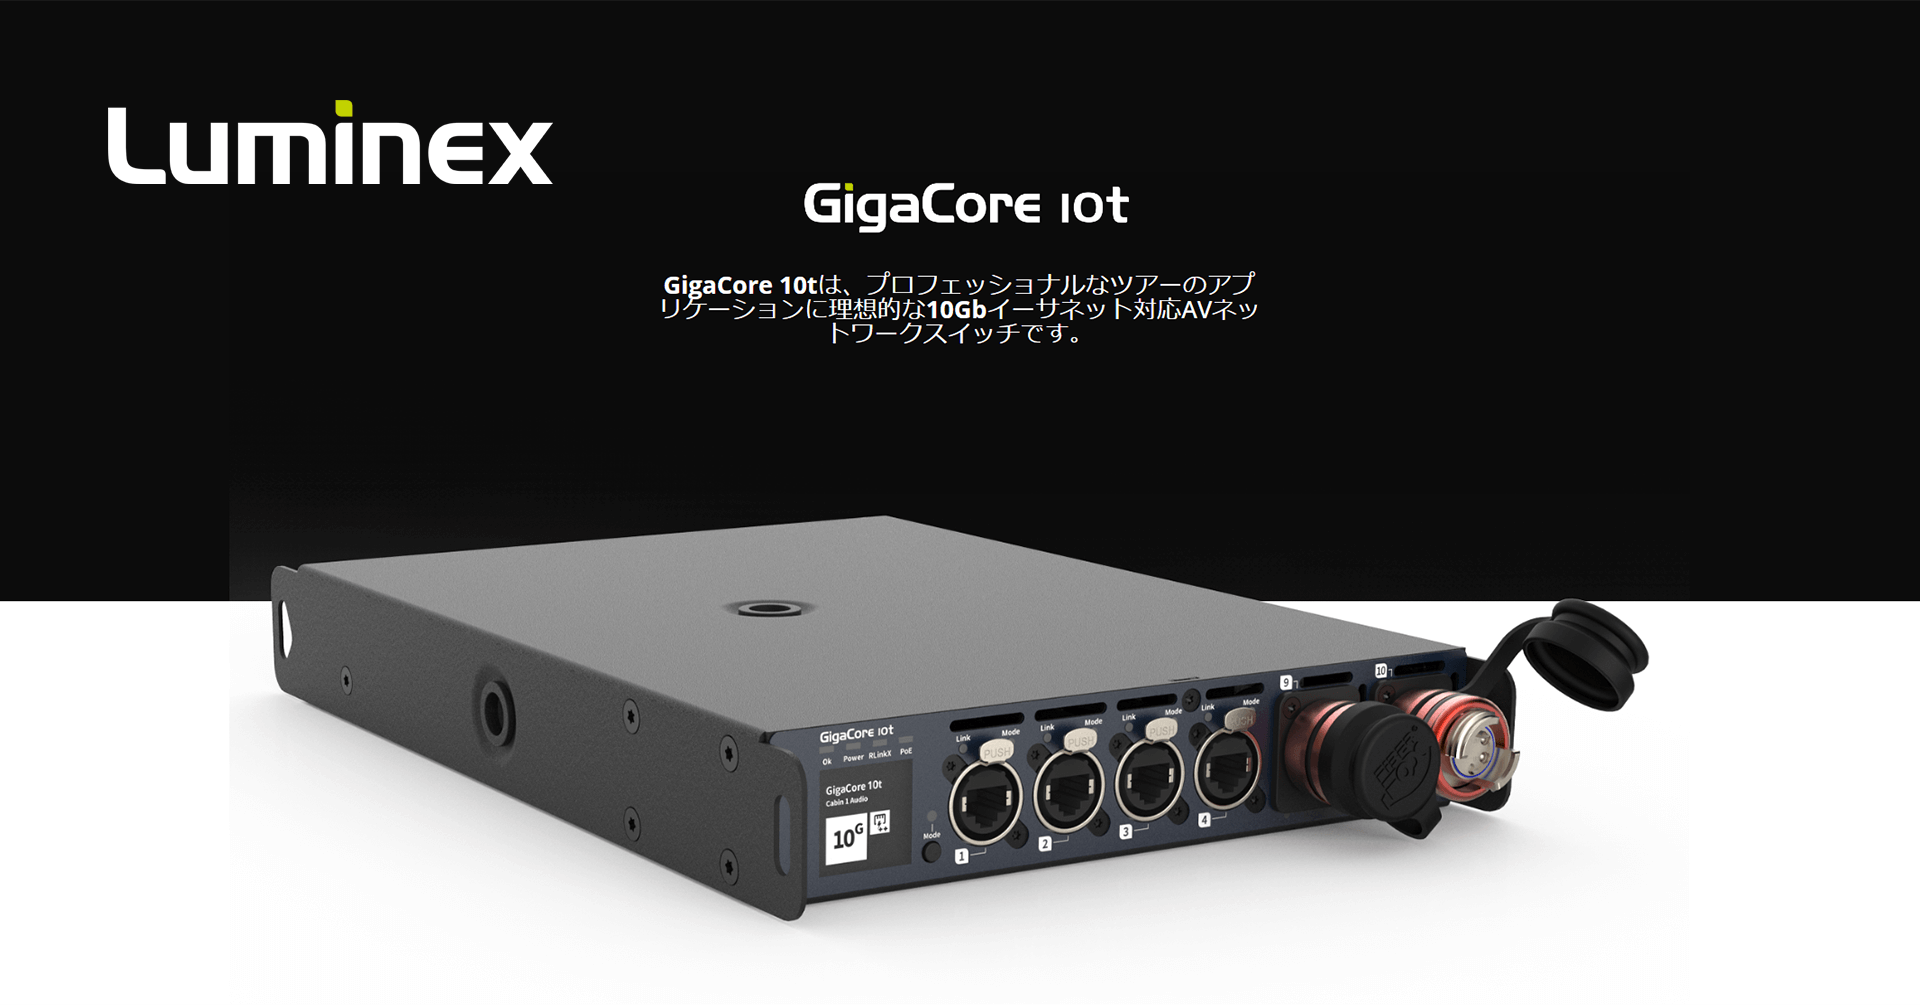 Luminex GigaCore 10t が発表されました